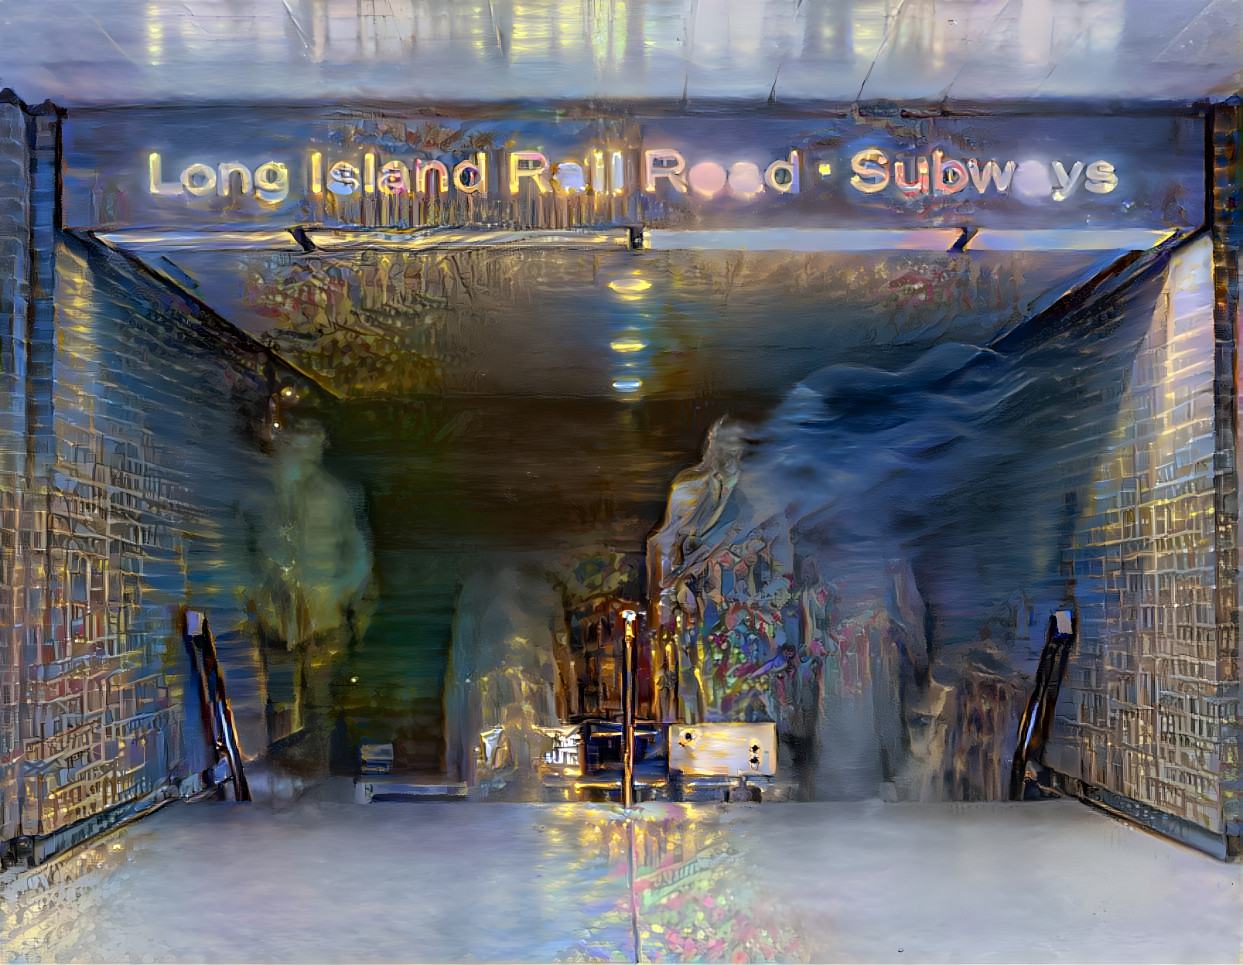 Long Island Rail Road • Subways